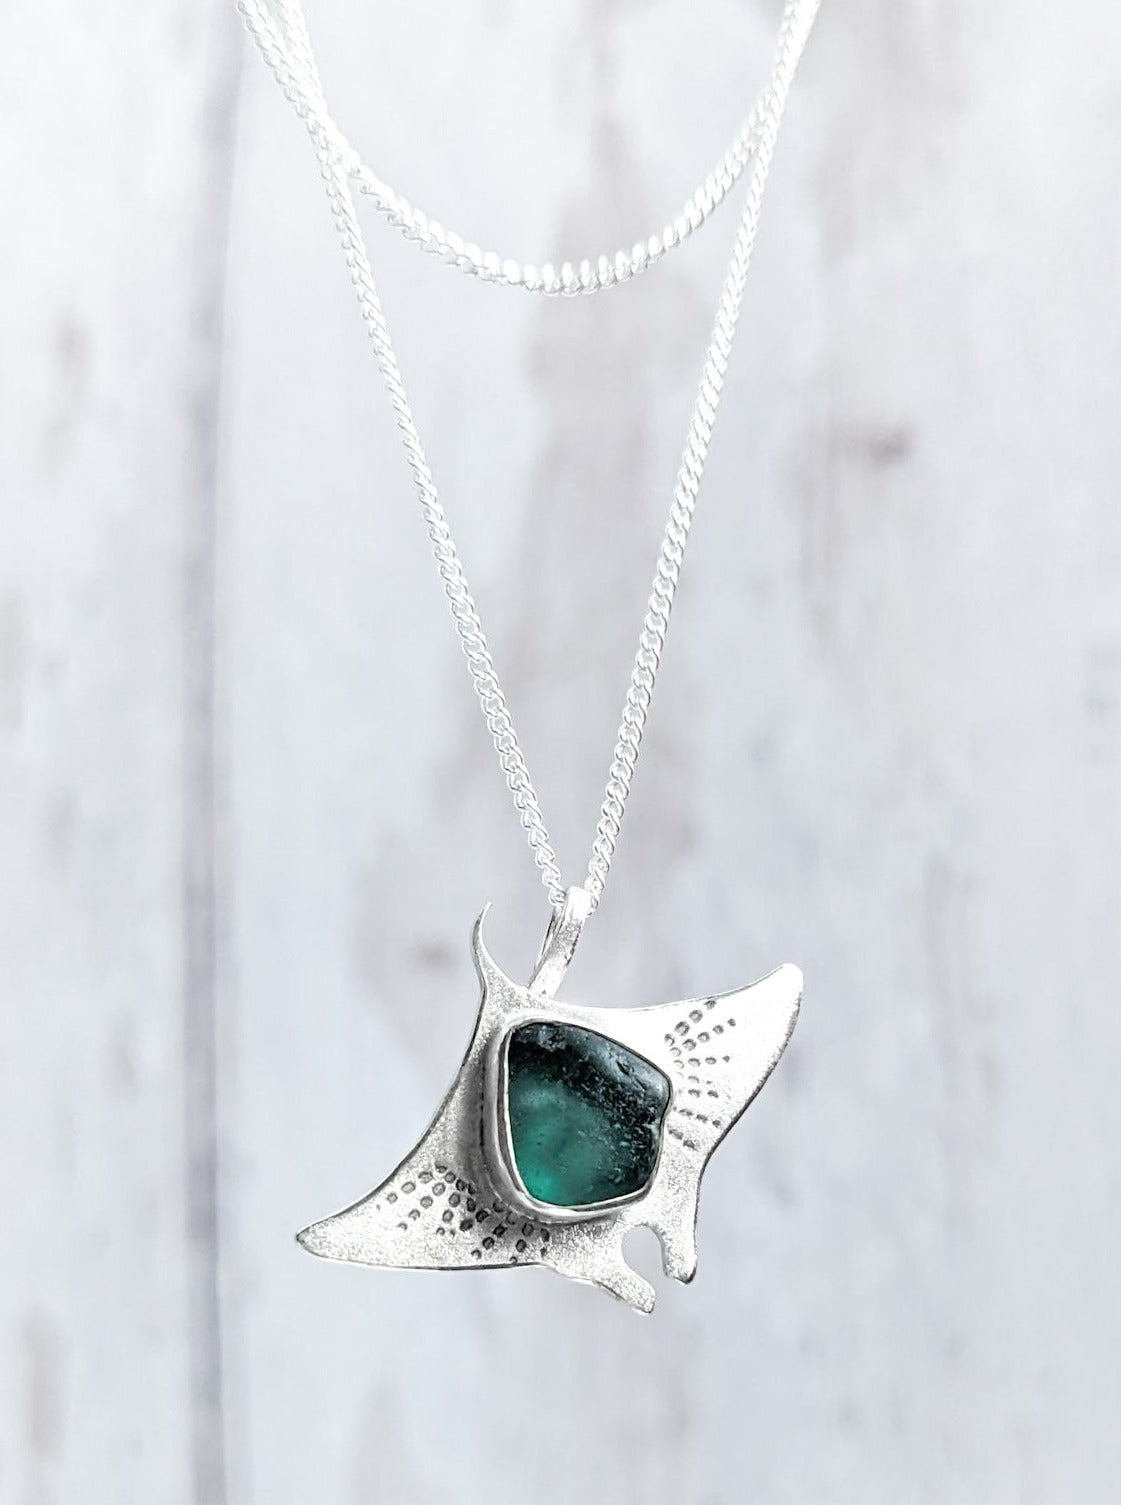 Teal sea glass manta ray pendant